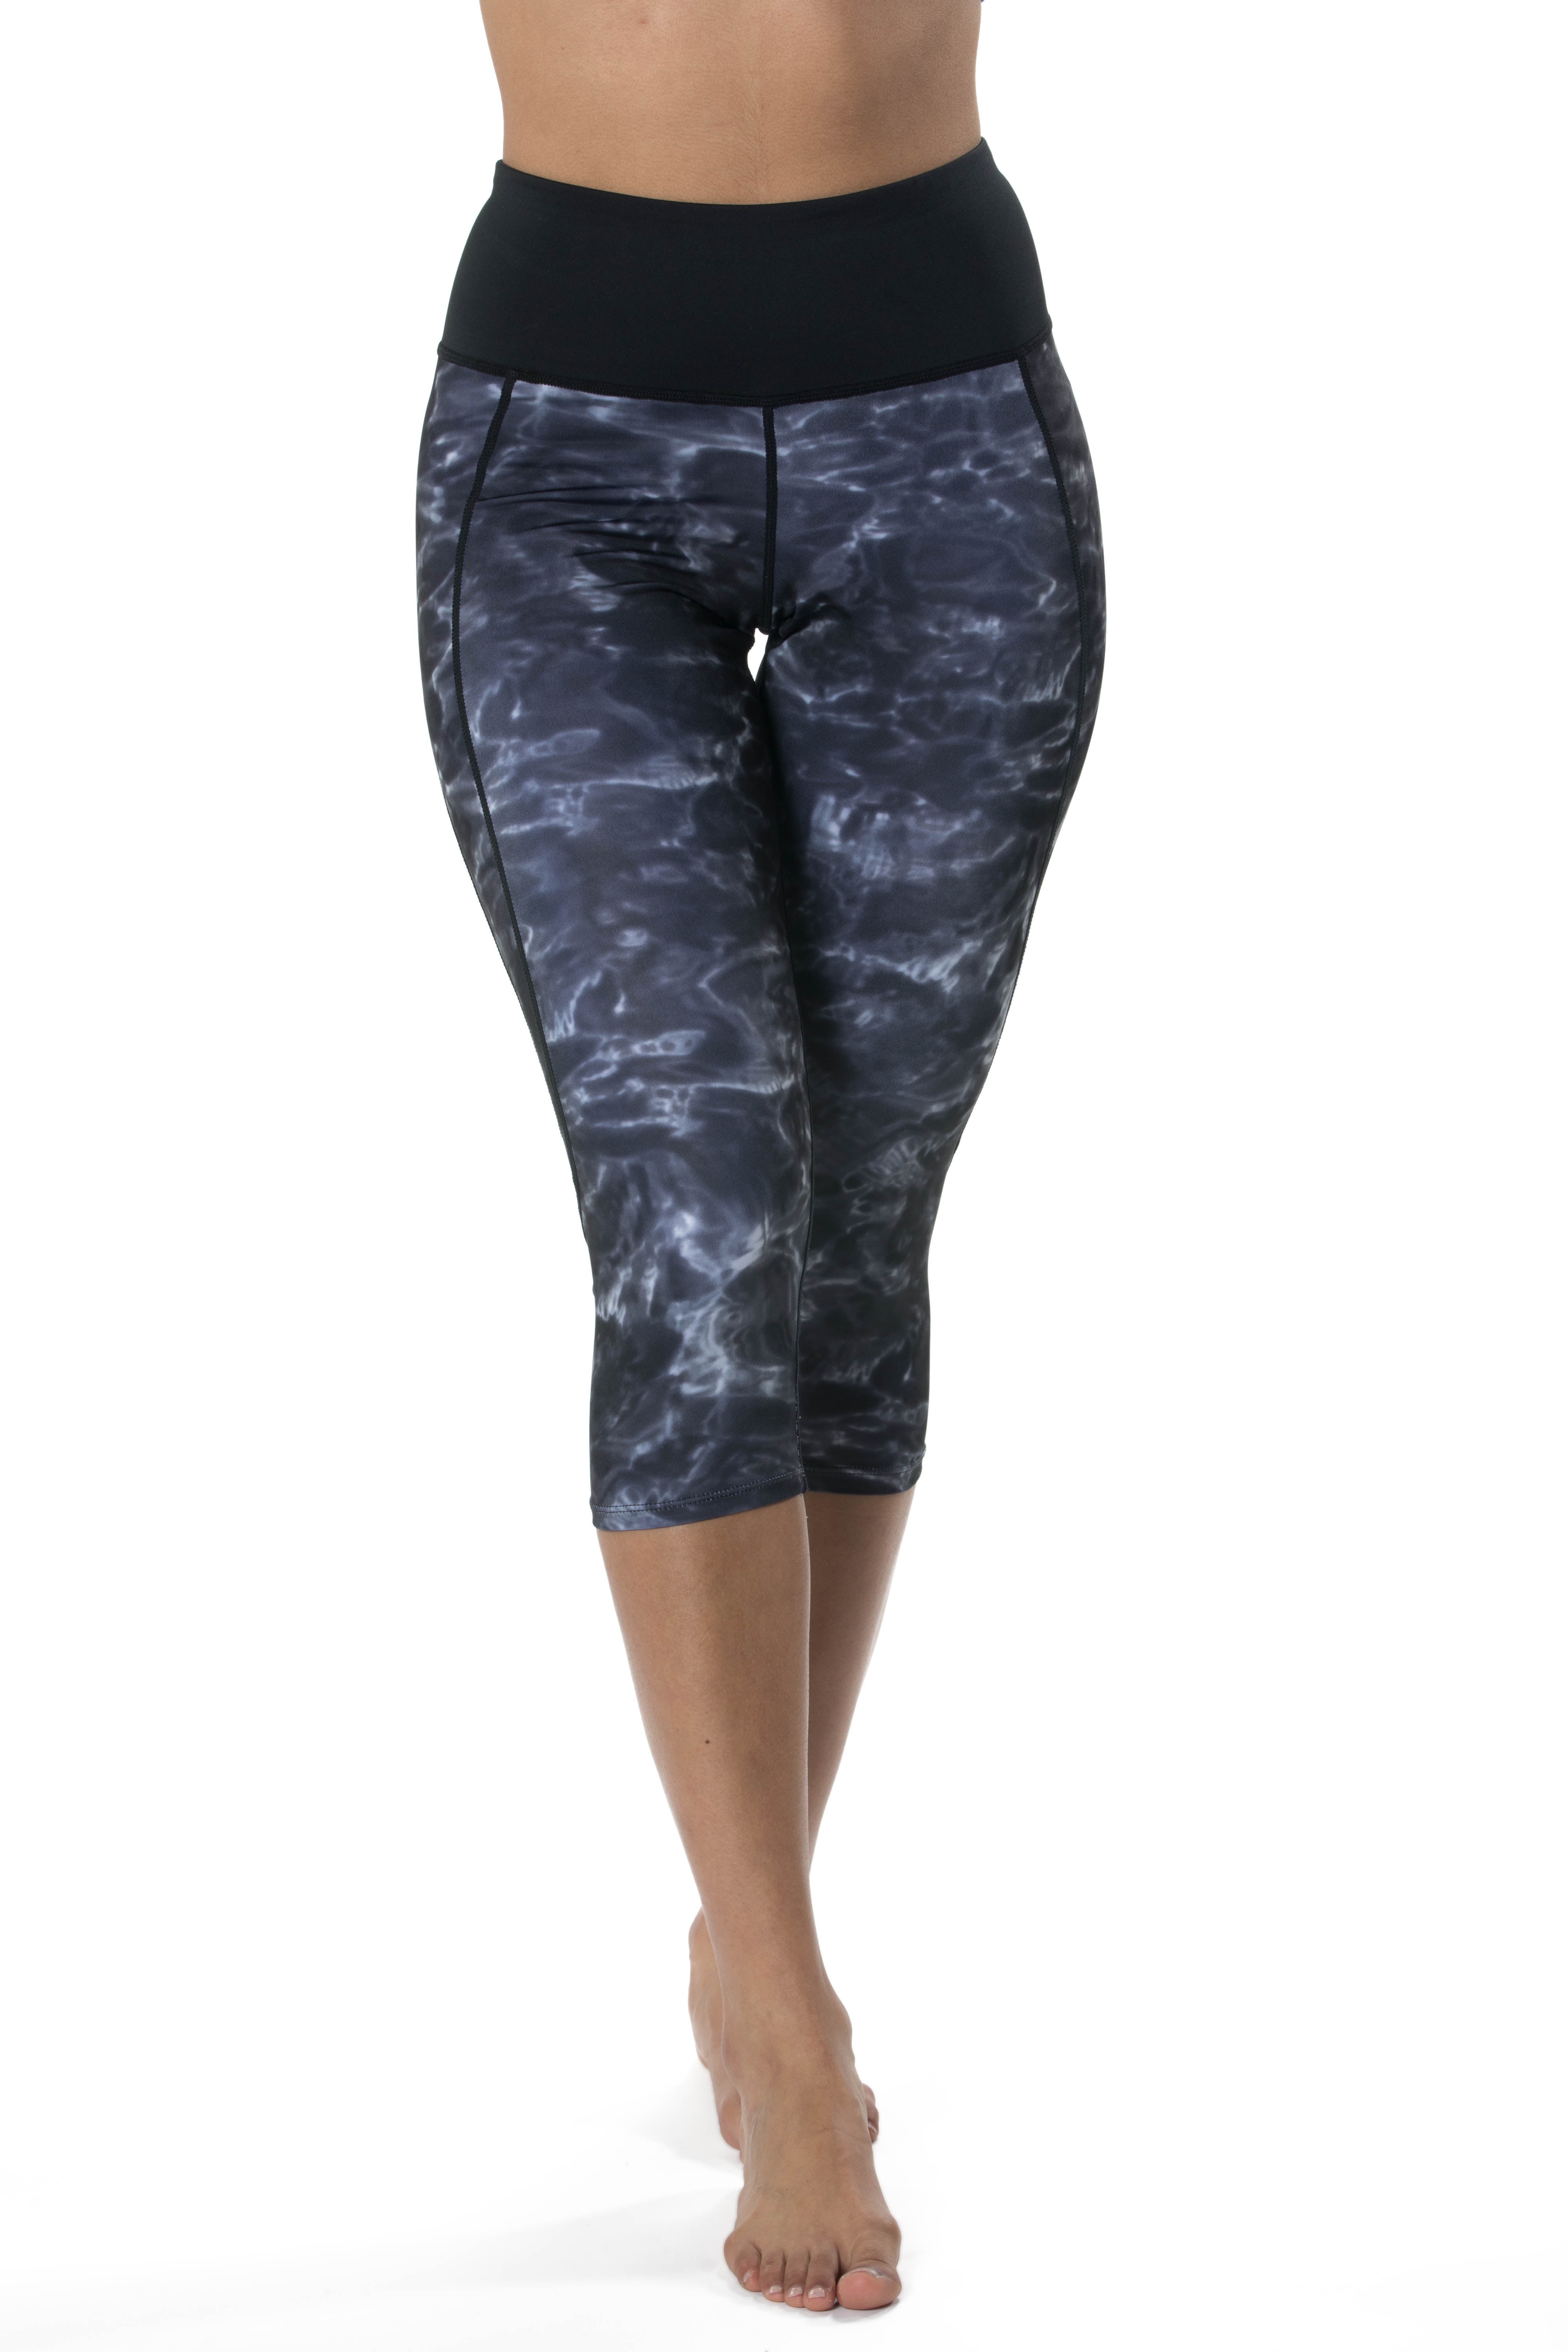 Aqua Design High Waisted Capri Leggings for Women: Black Water/Black size 2X-Large  